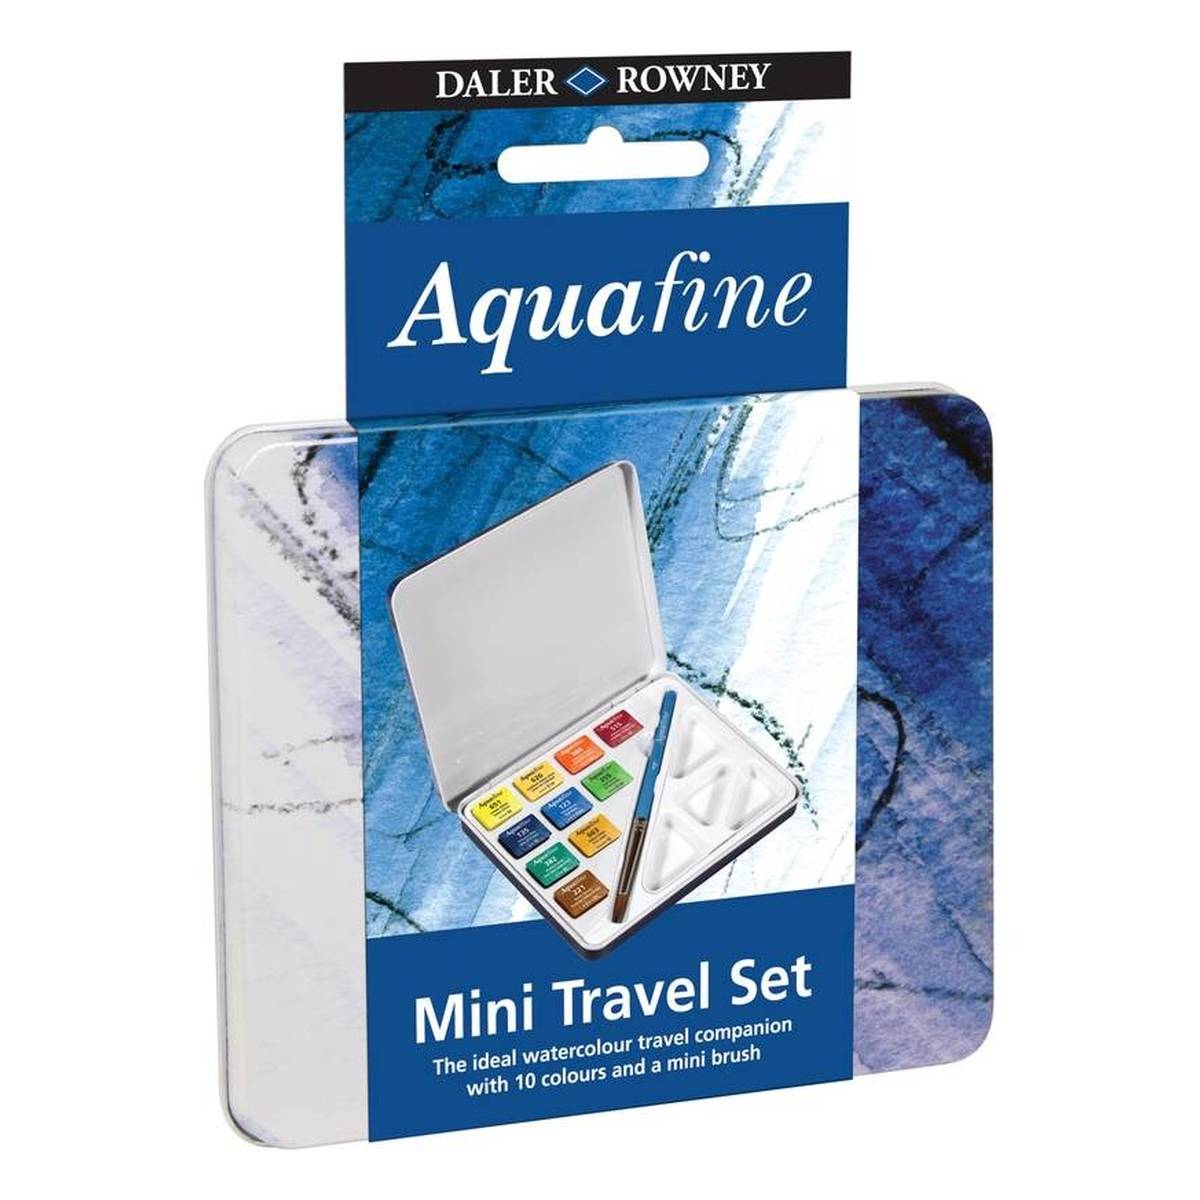 Daler-Rowney Aquafine Travel Set 